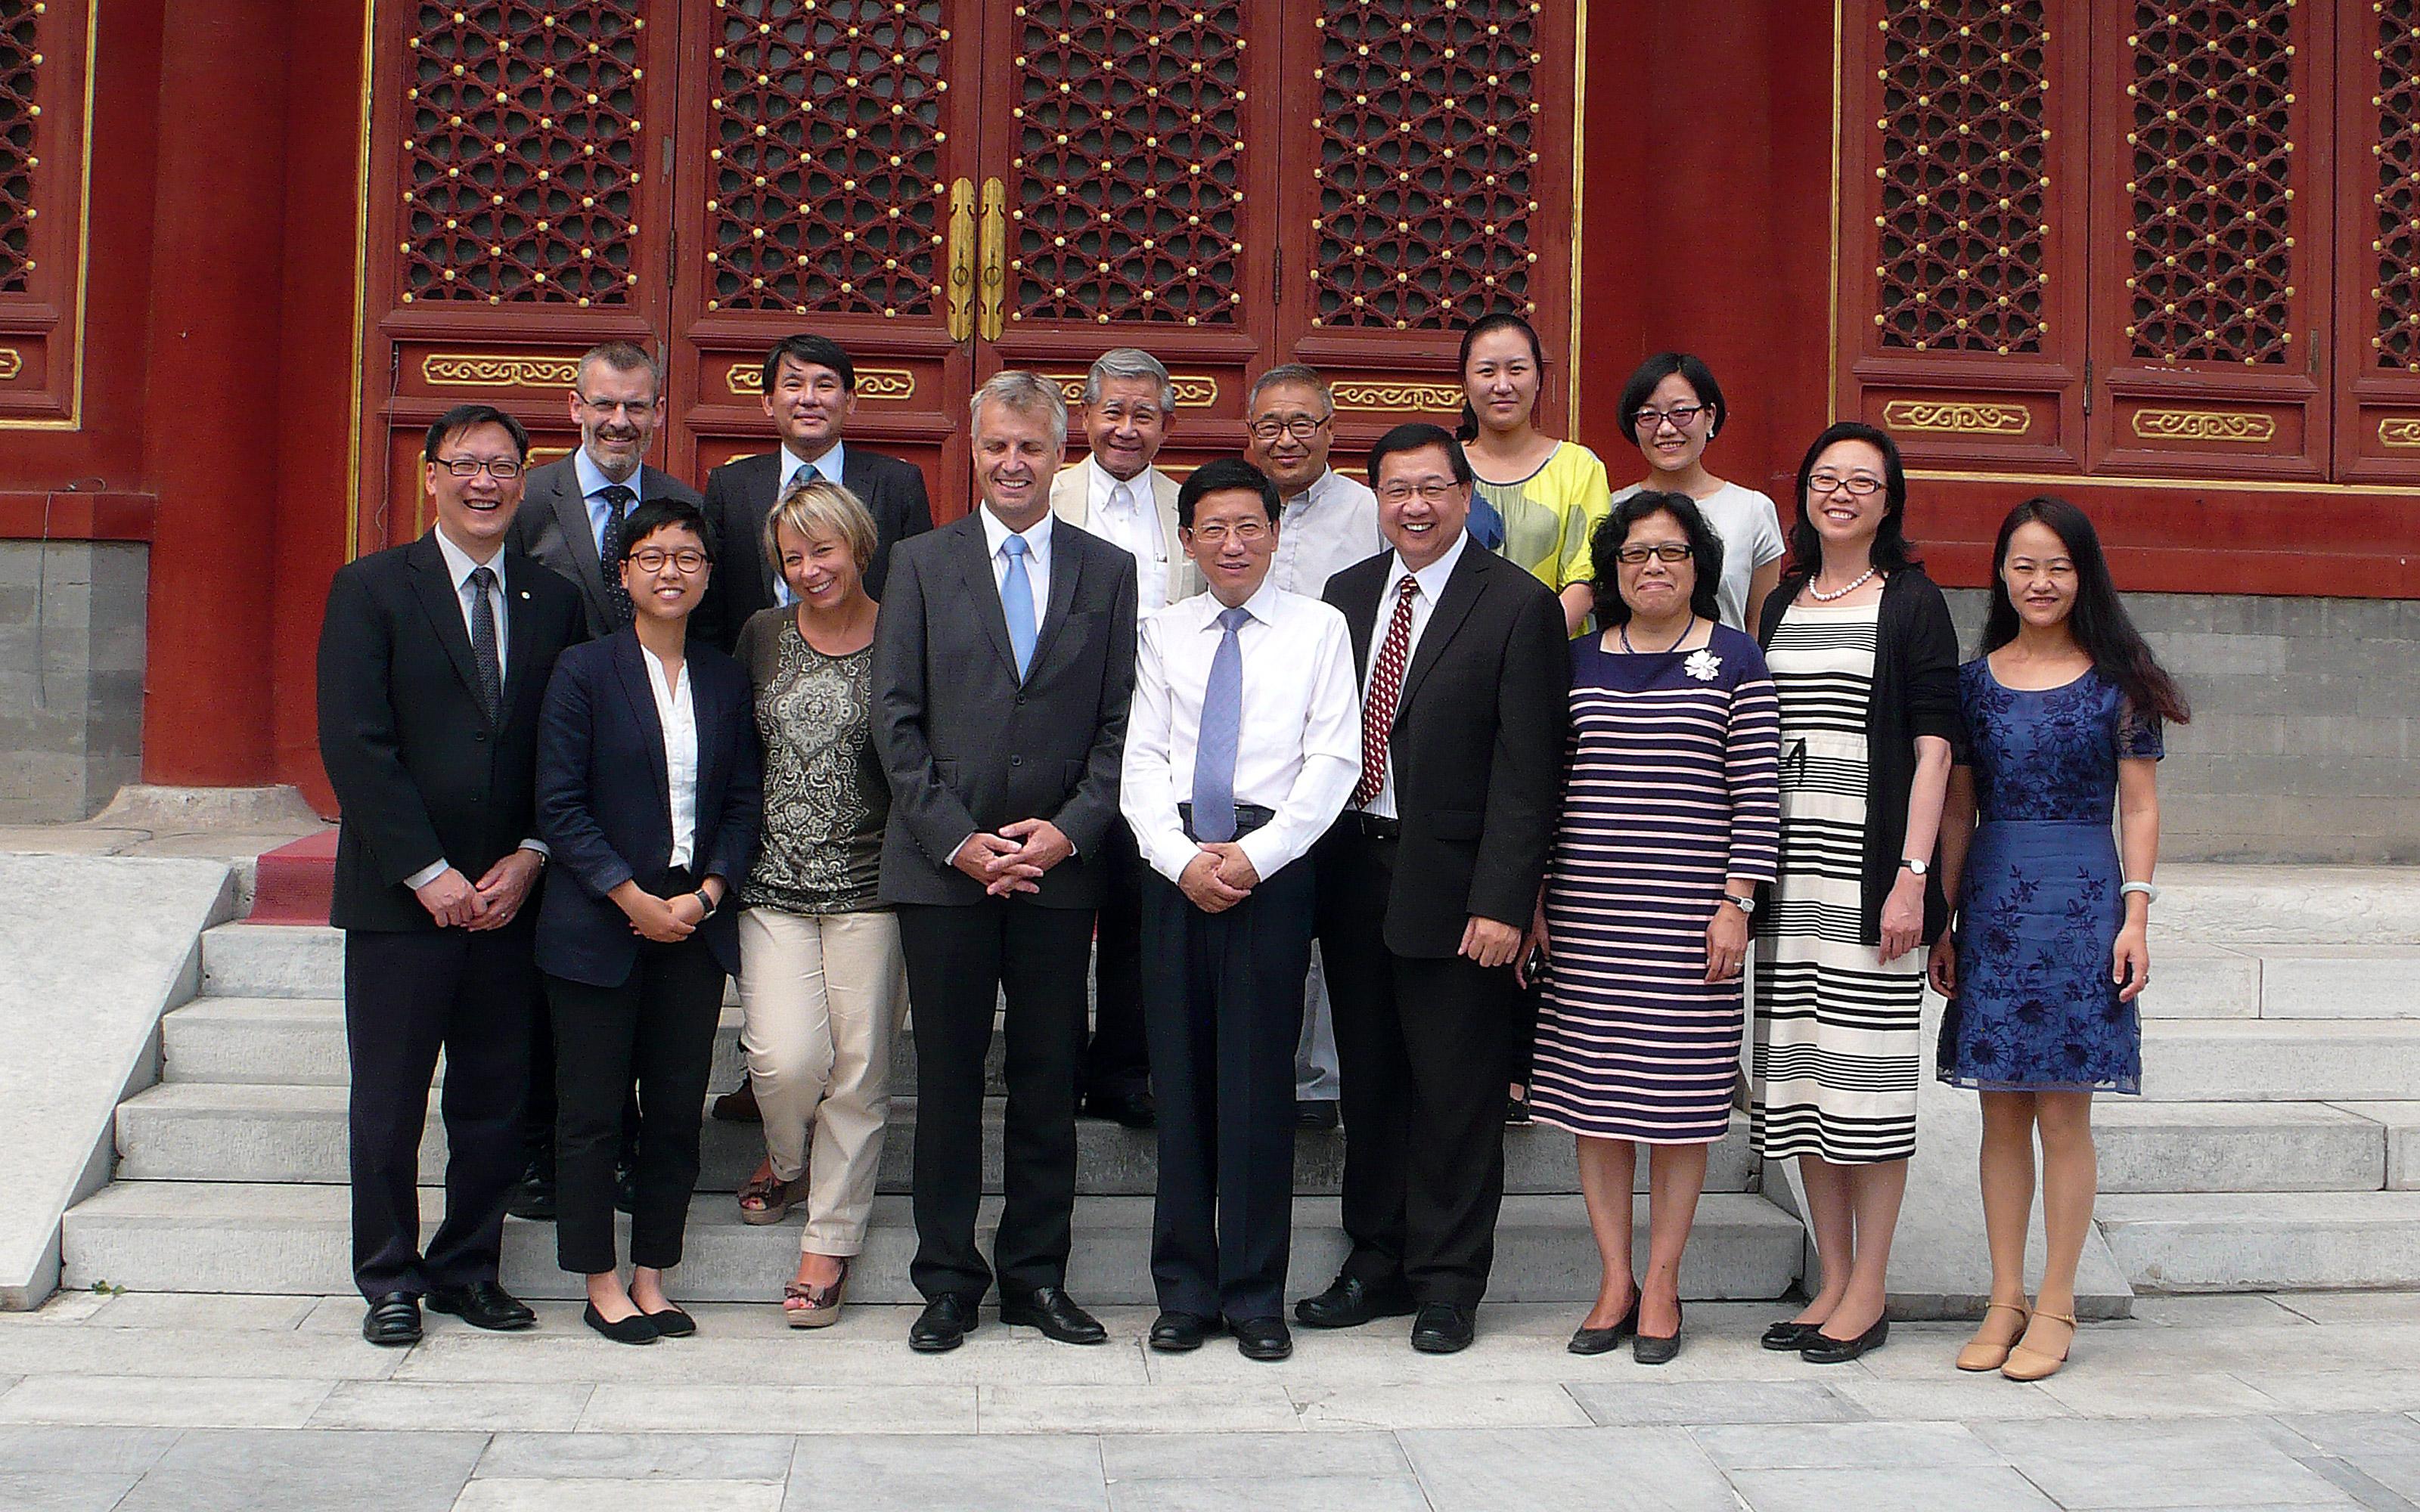 LWF delegation in China, July 2013. Â© LWF/Philip Lok